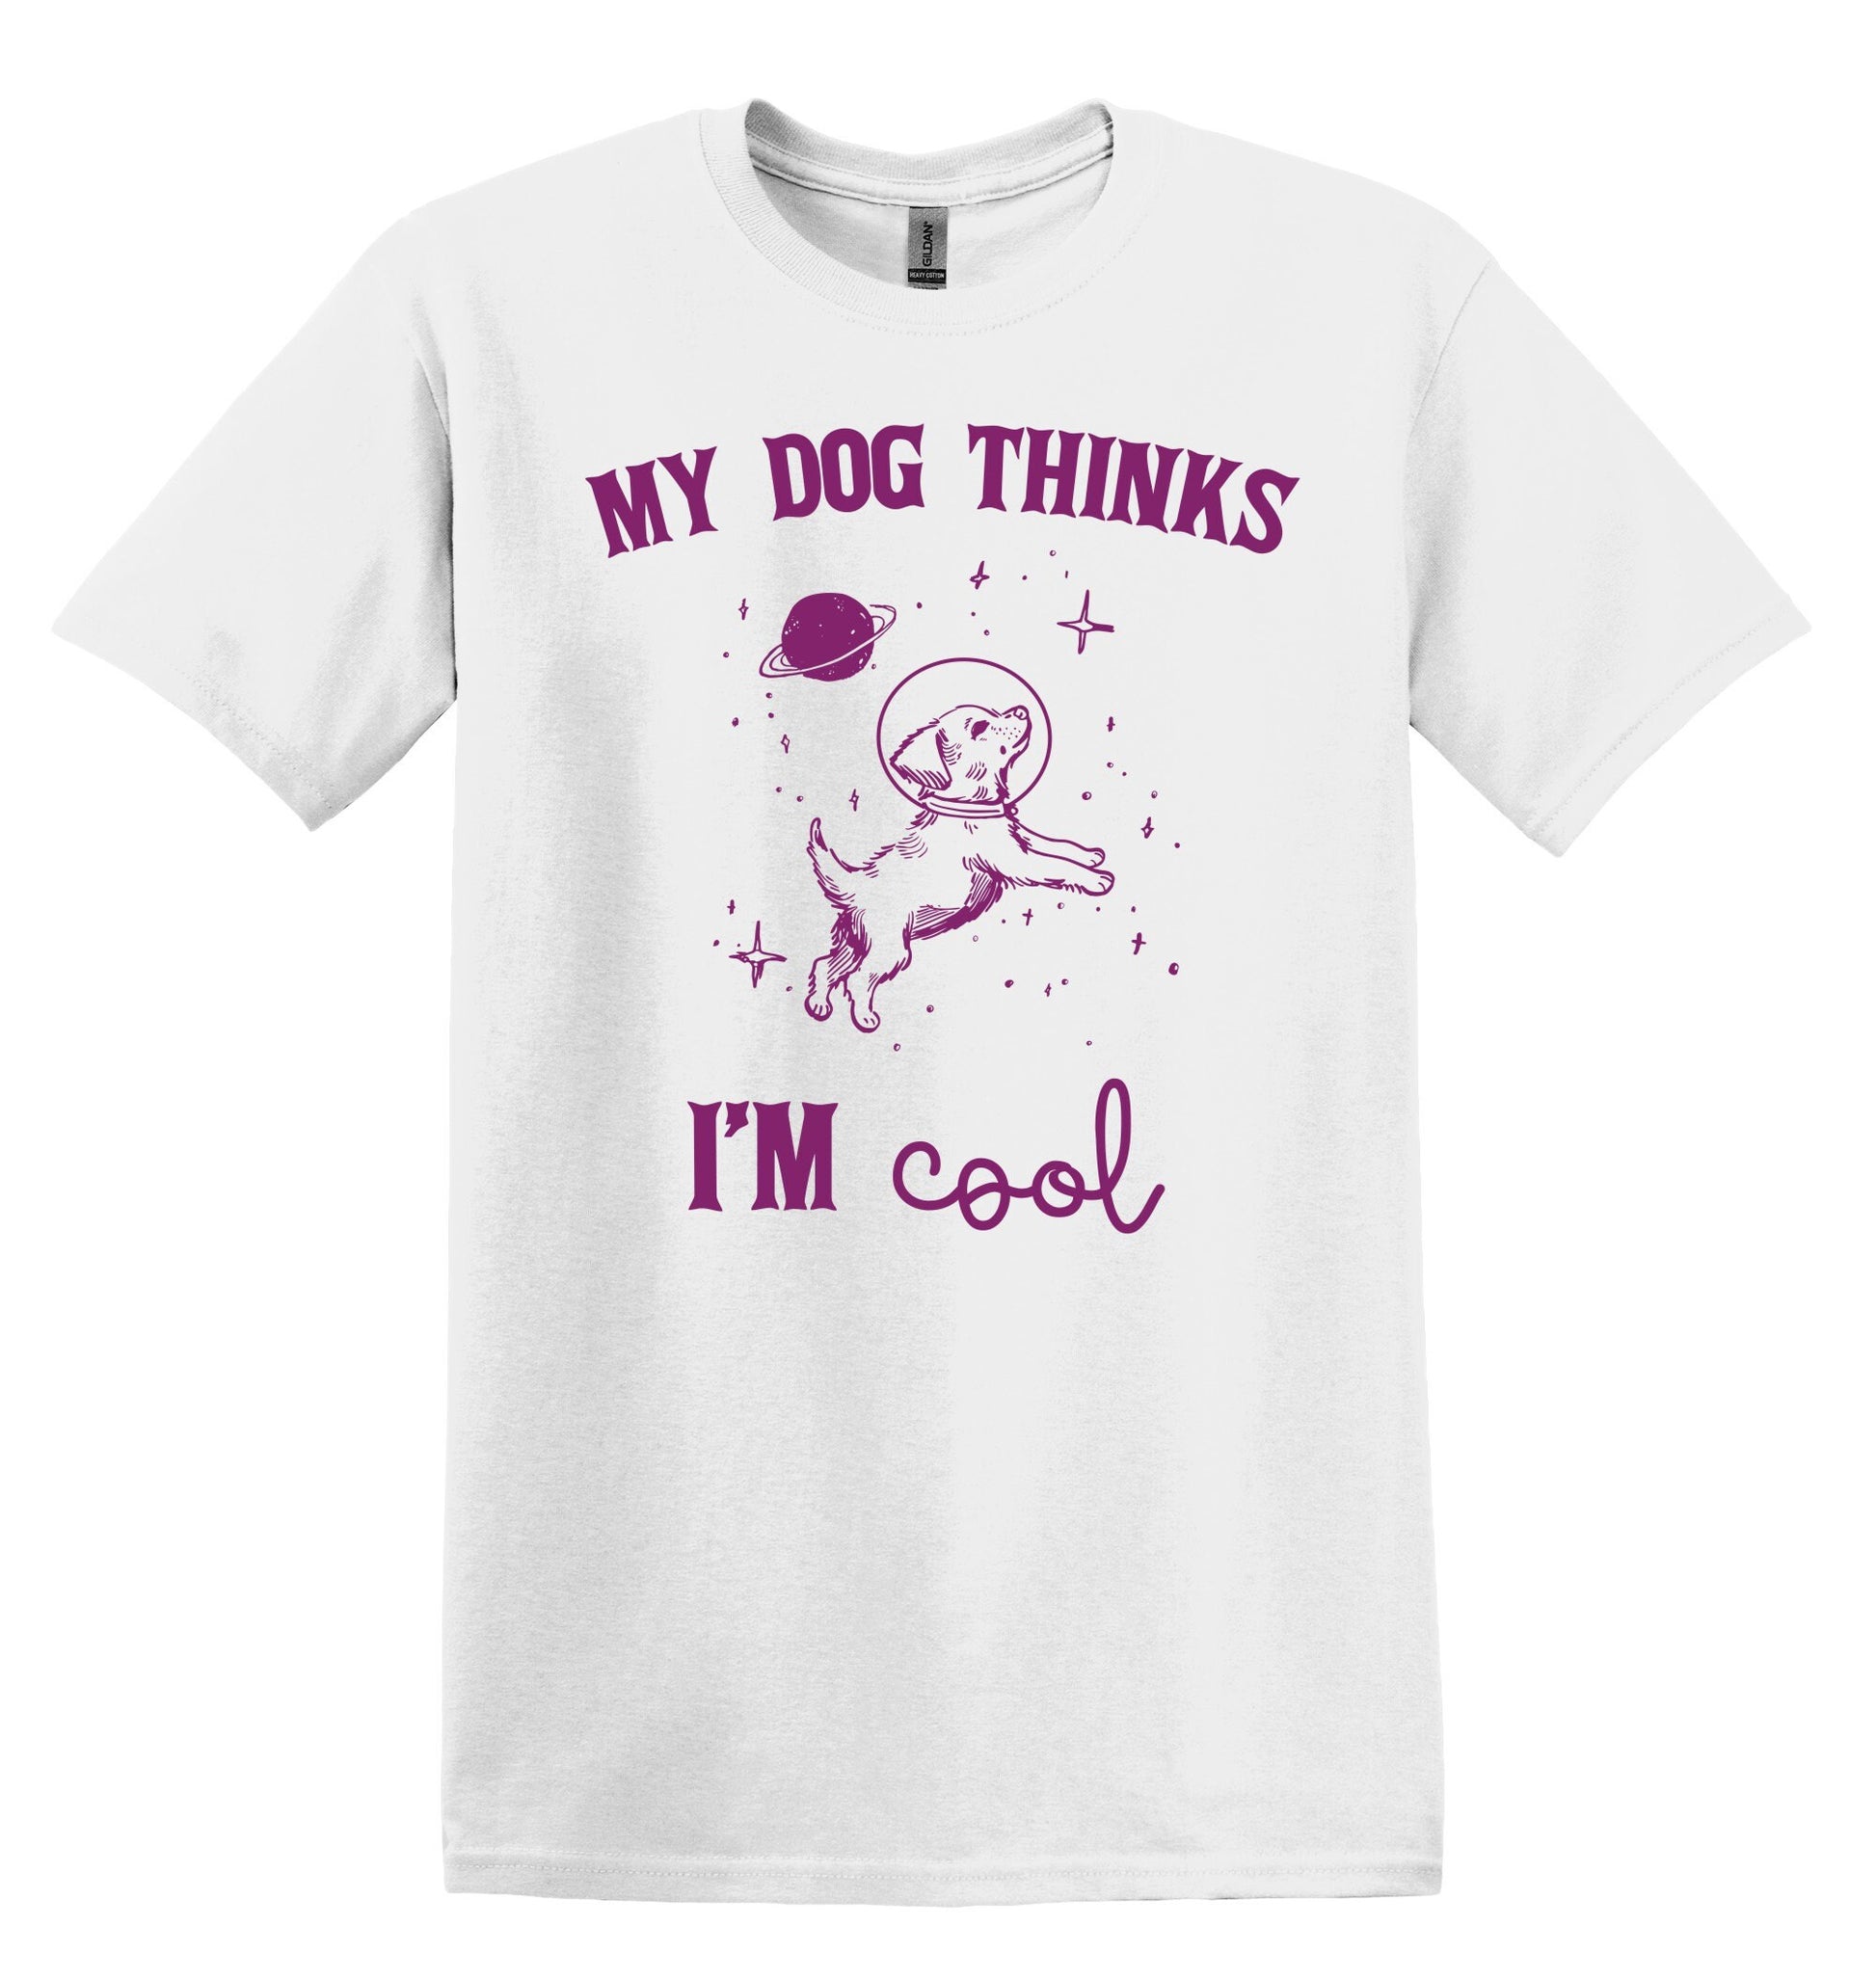 My Dog Thinks I'm Cool Shirt Graphic Shirt Funny Shirts Vintage Funny T-Shirts Shirt Minimalist Shirt Gag Shirt Funny Dog Shirt